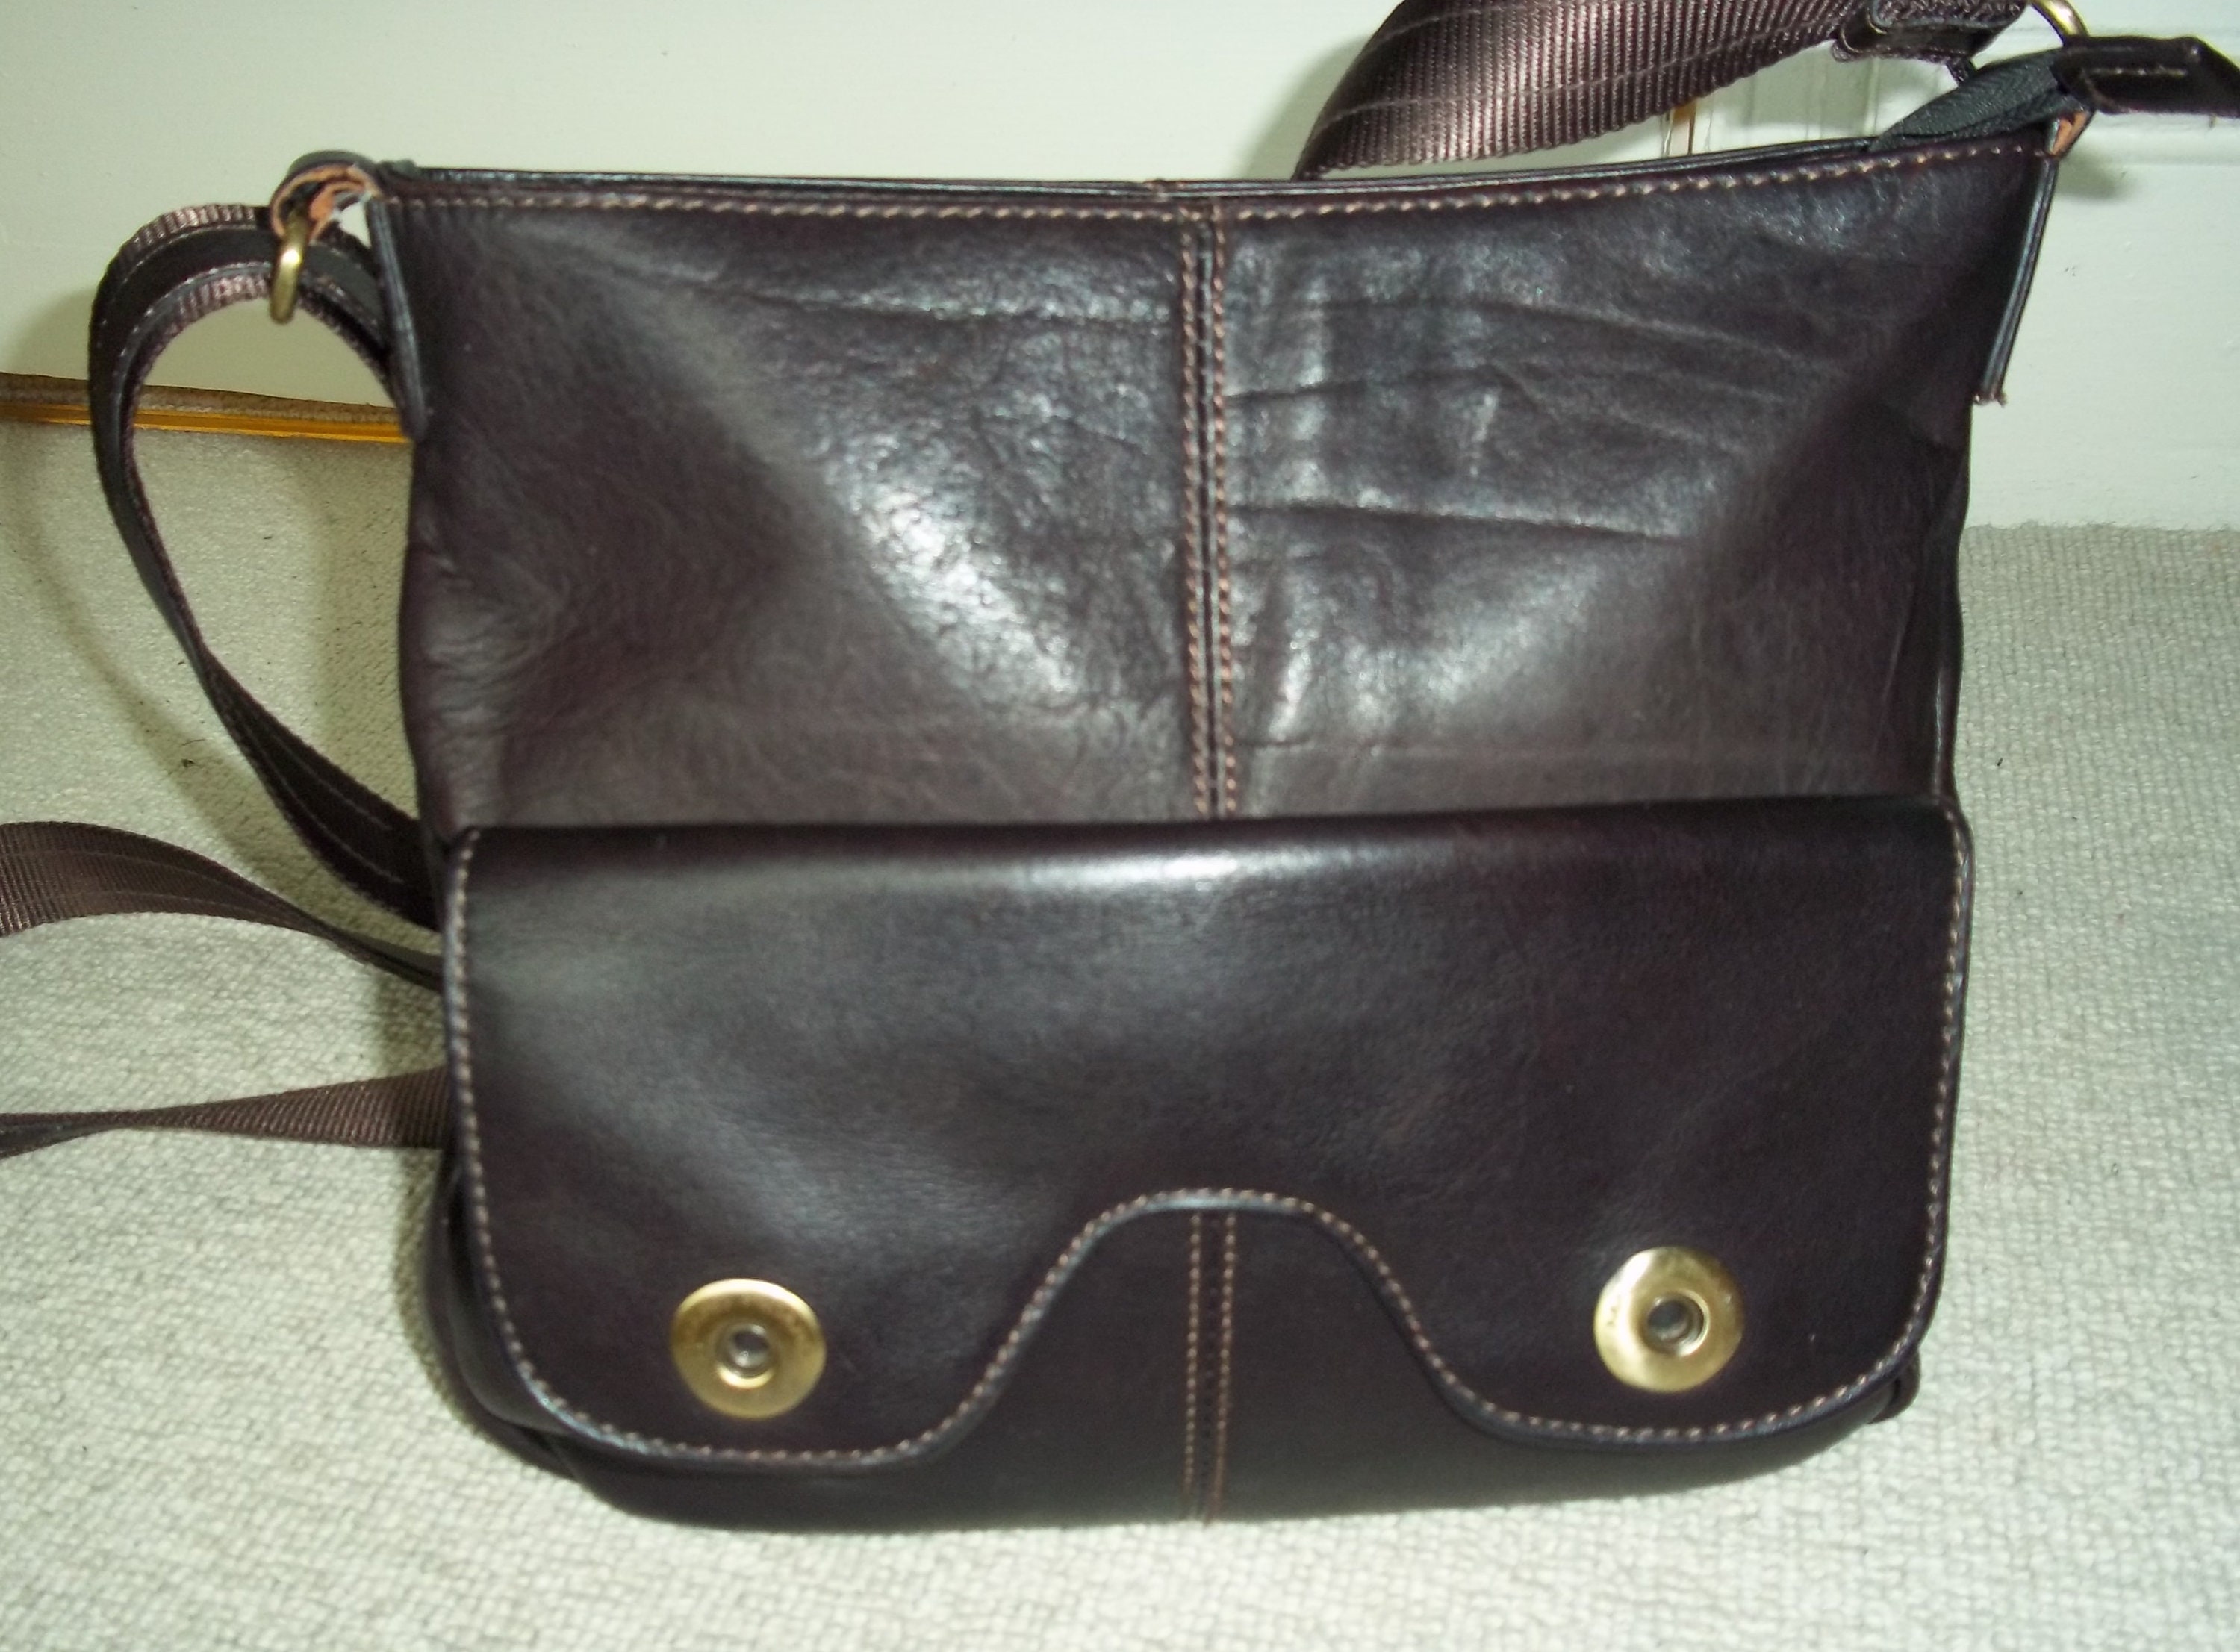 Picard Women's Leather Bag, Ocean: Handbags